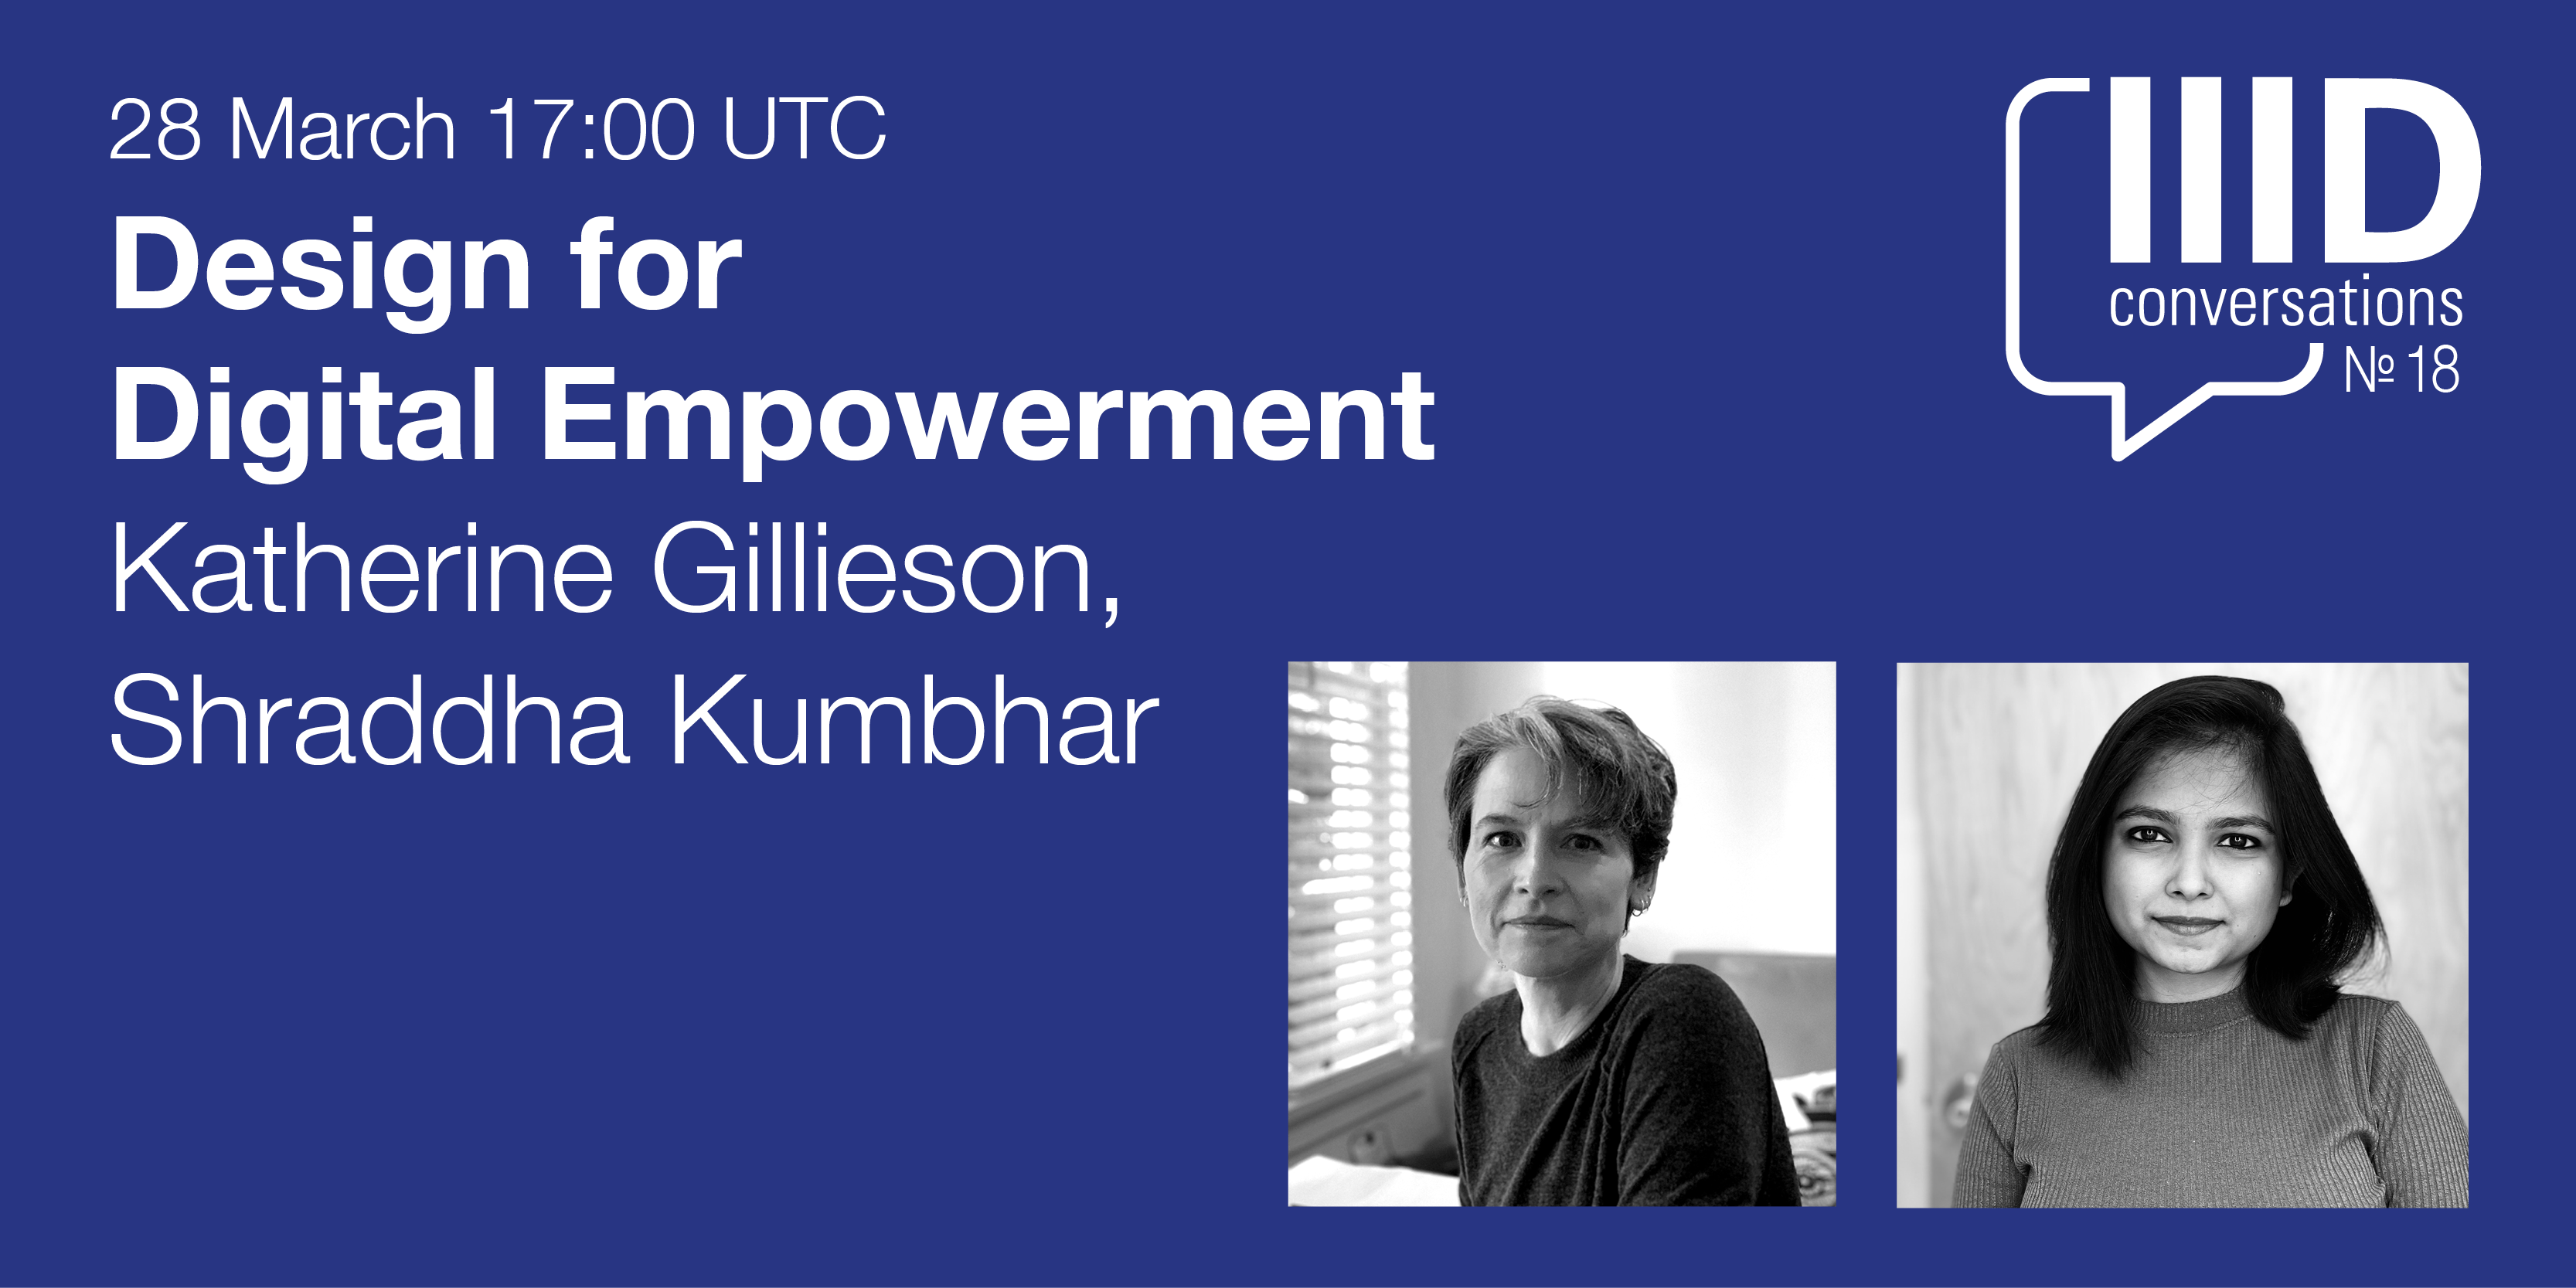 IIID conversation: Katherine Gillieson and Shradda Khumbar